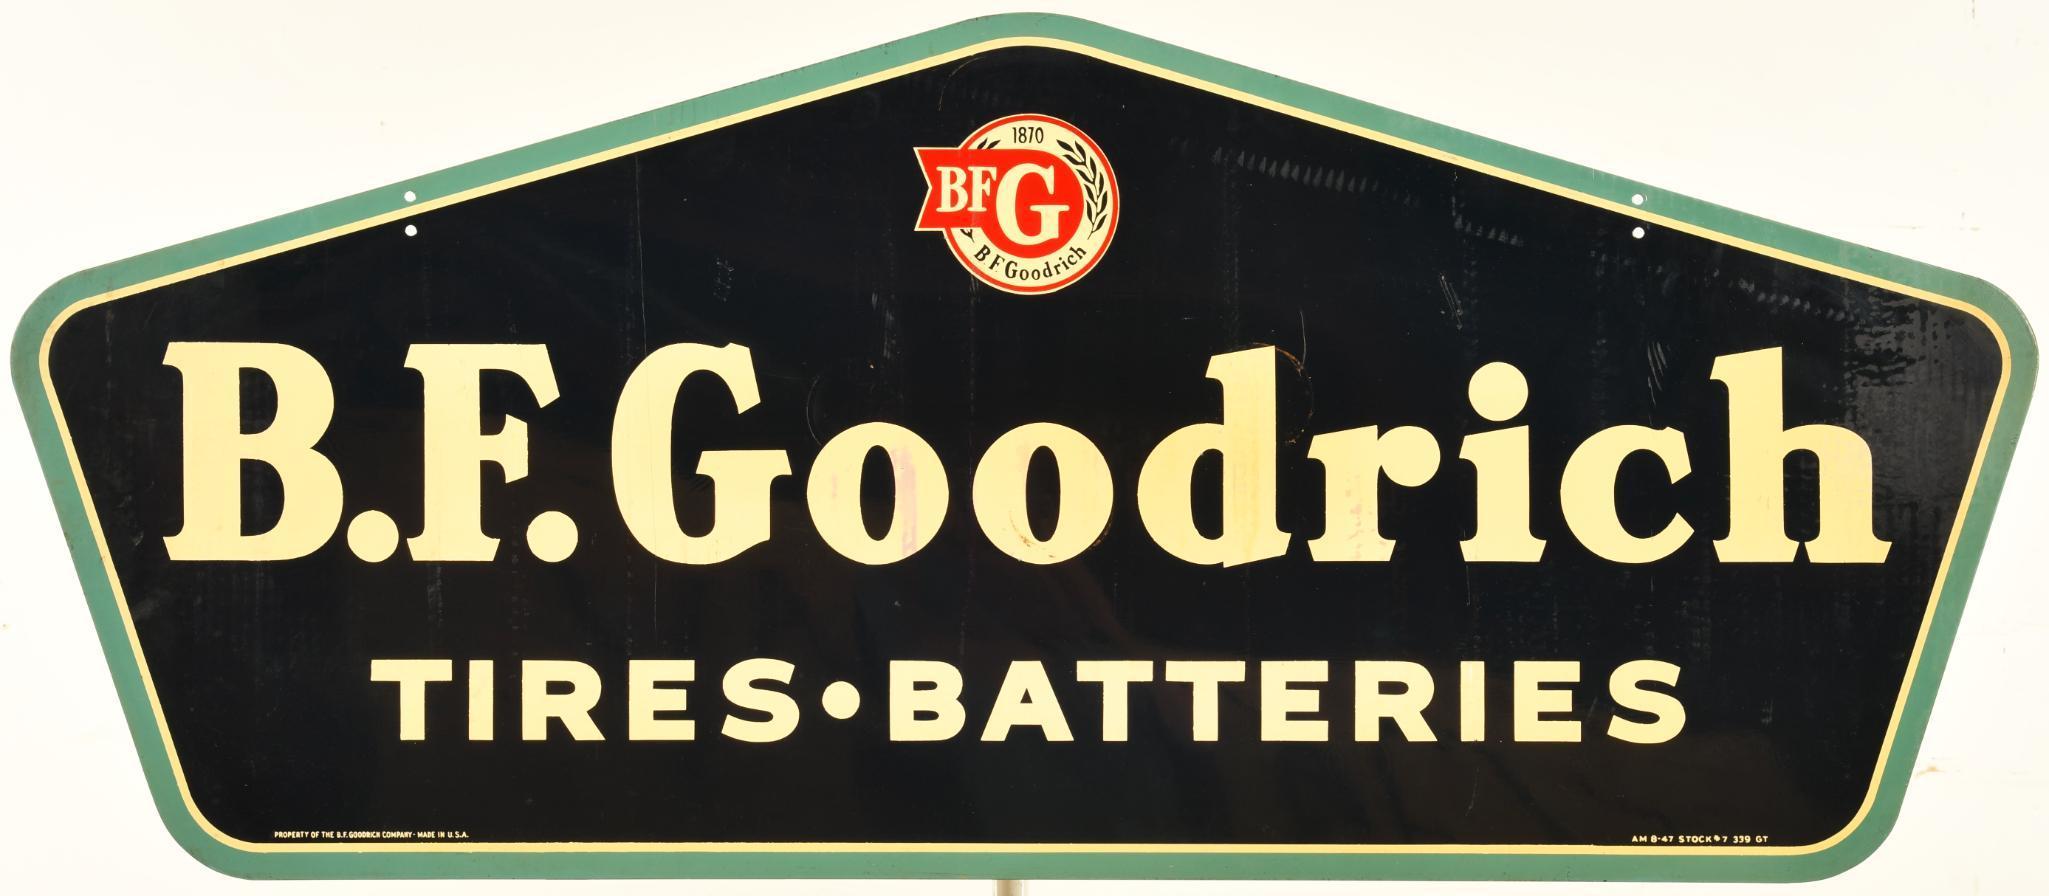 B.F. Goodrich Tires Batteries Sign